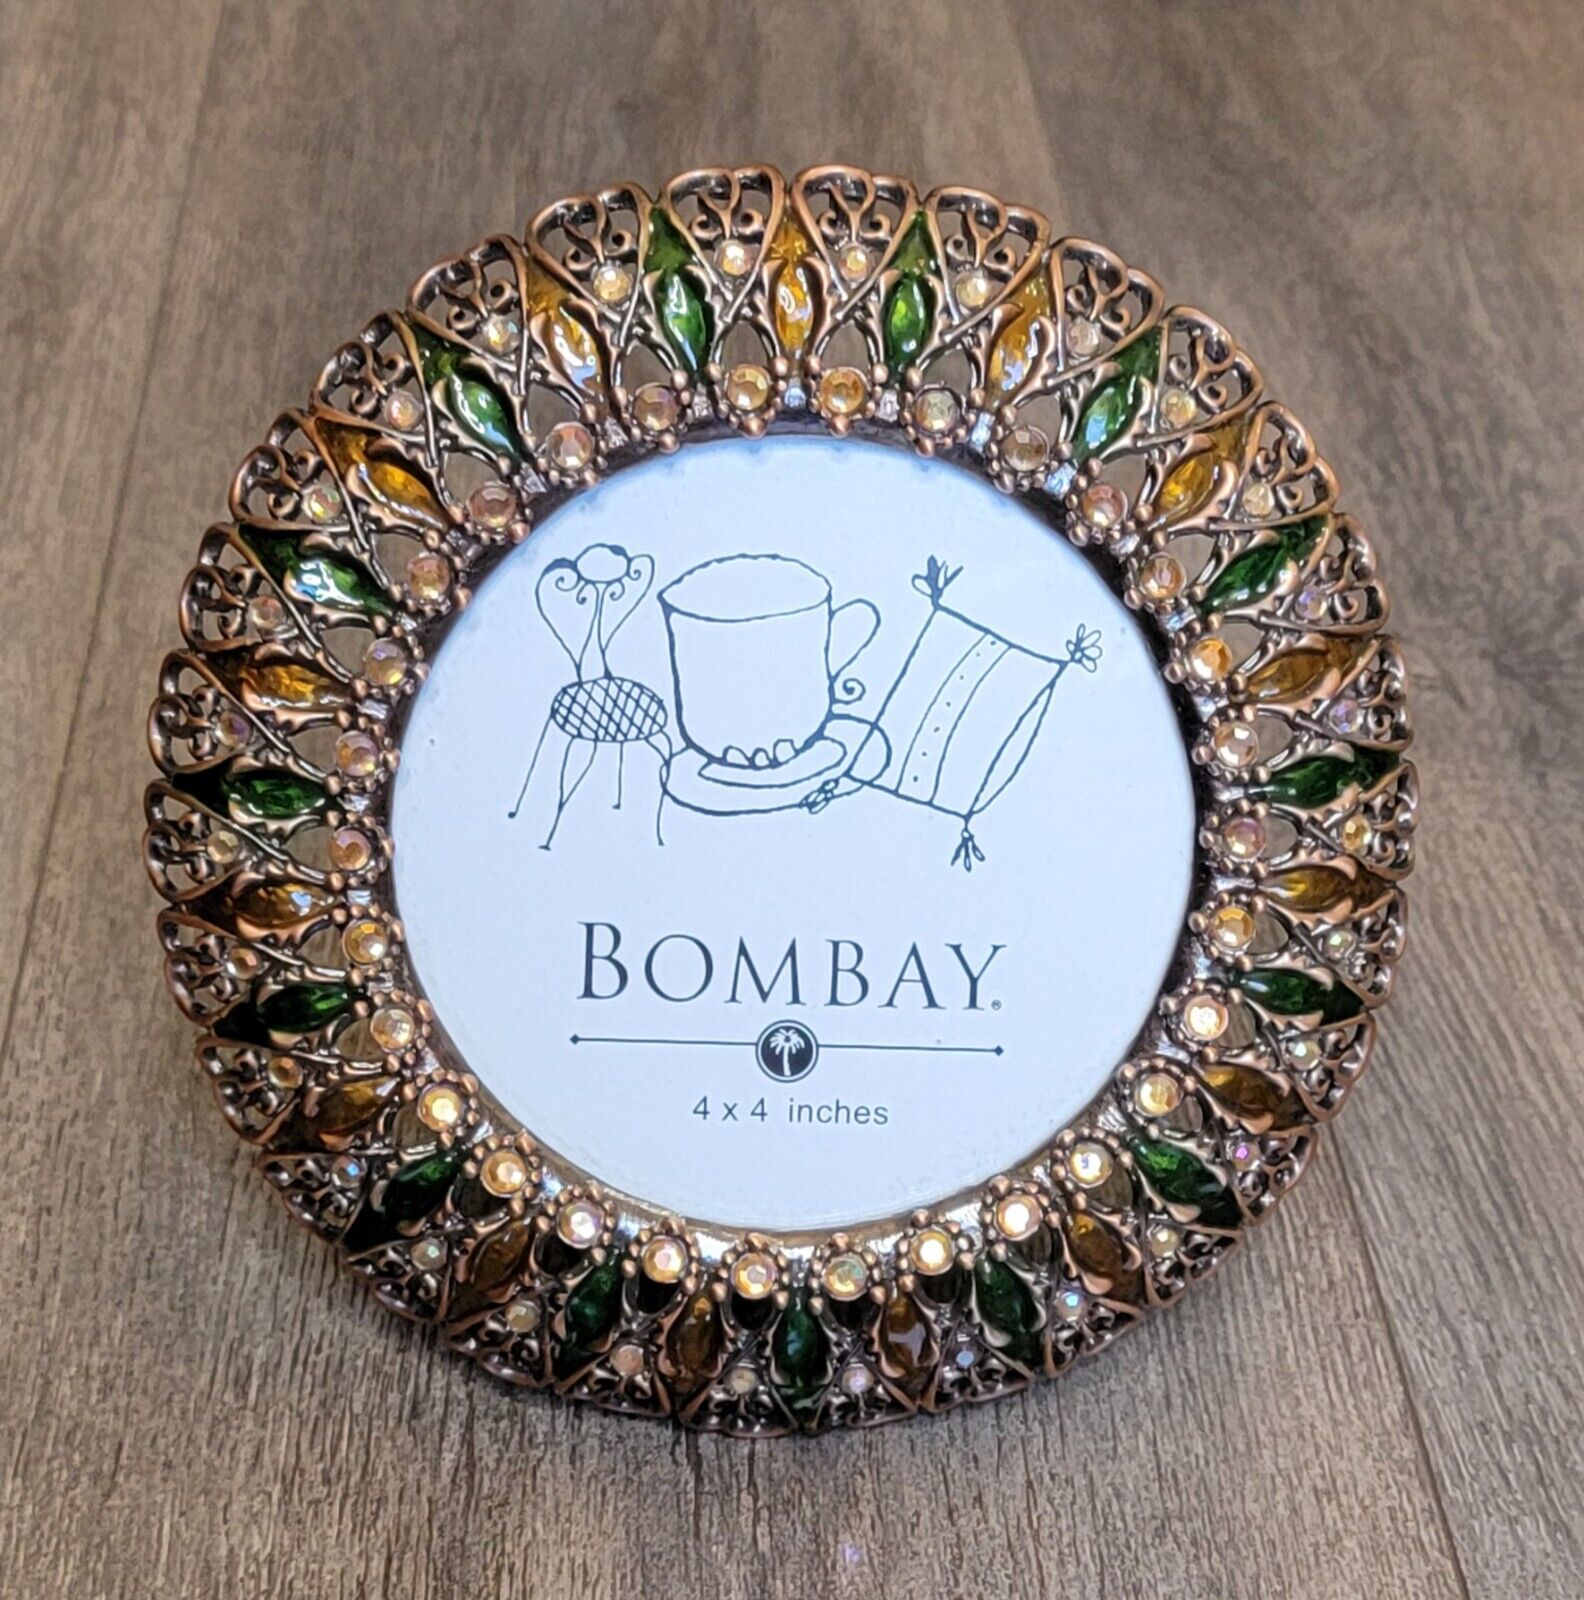 Bombay Round Enamel Jeweled Picture Frame 4x4